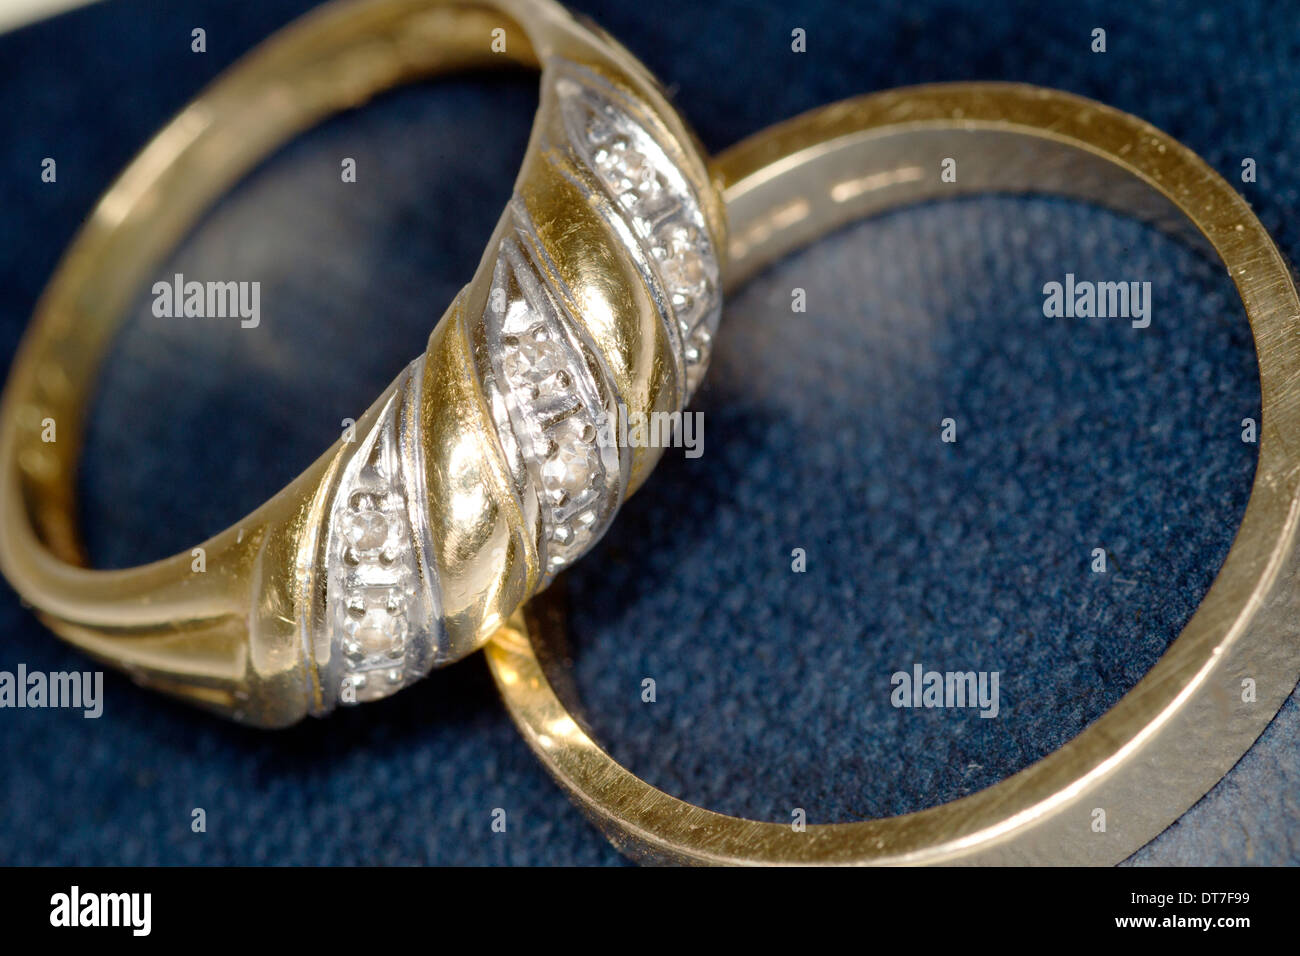 Pair of gold wedding rings Stock Photo